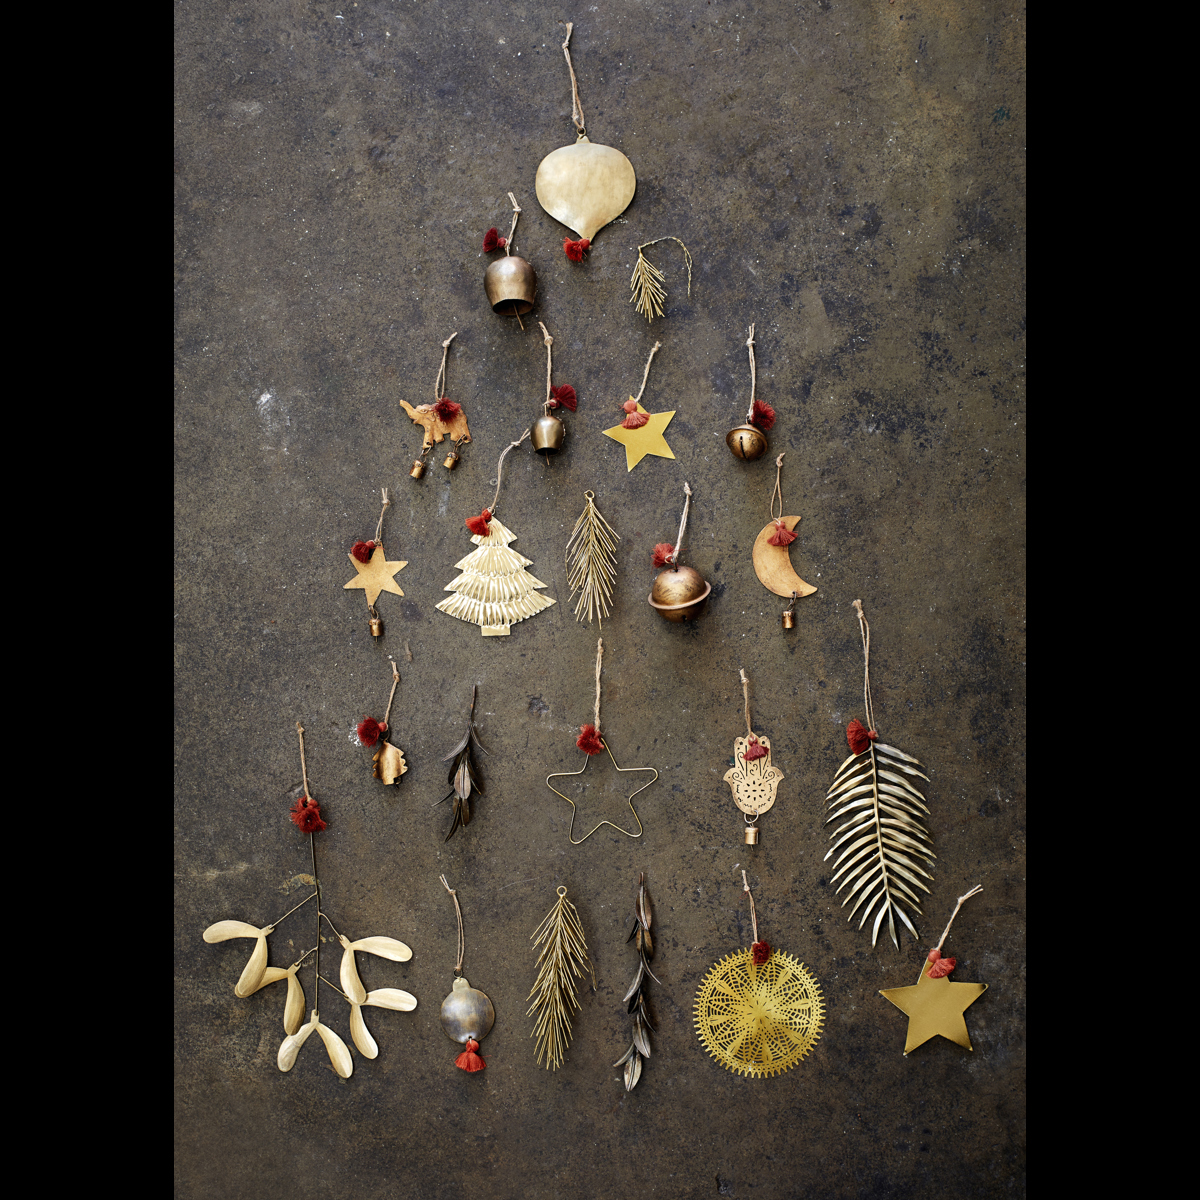 Hanging iron ornaments